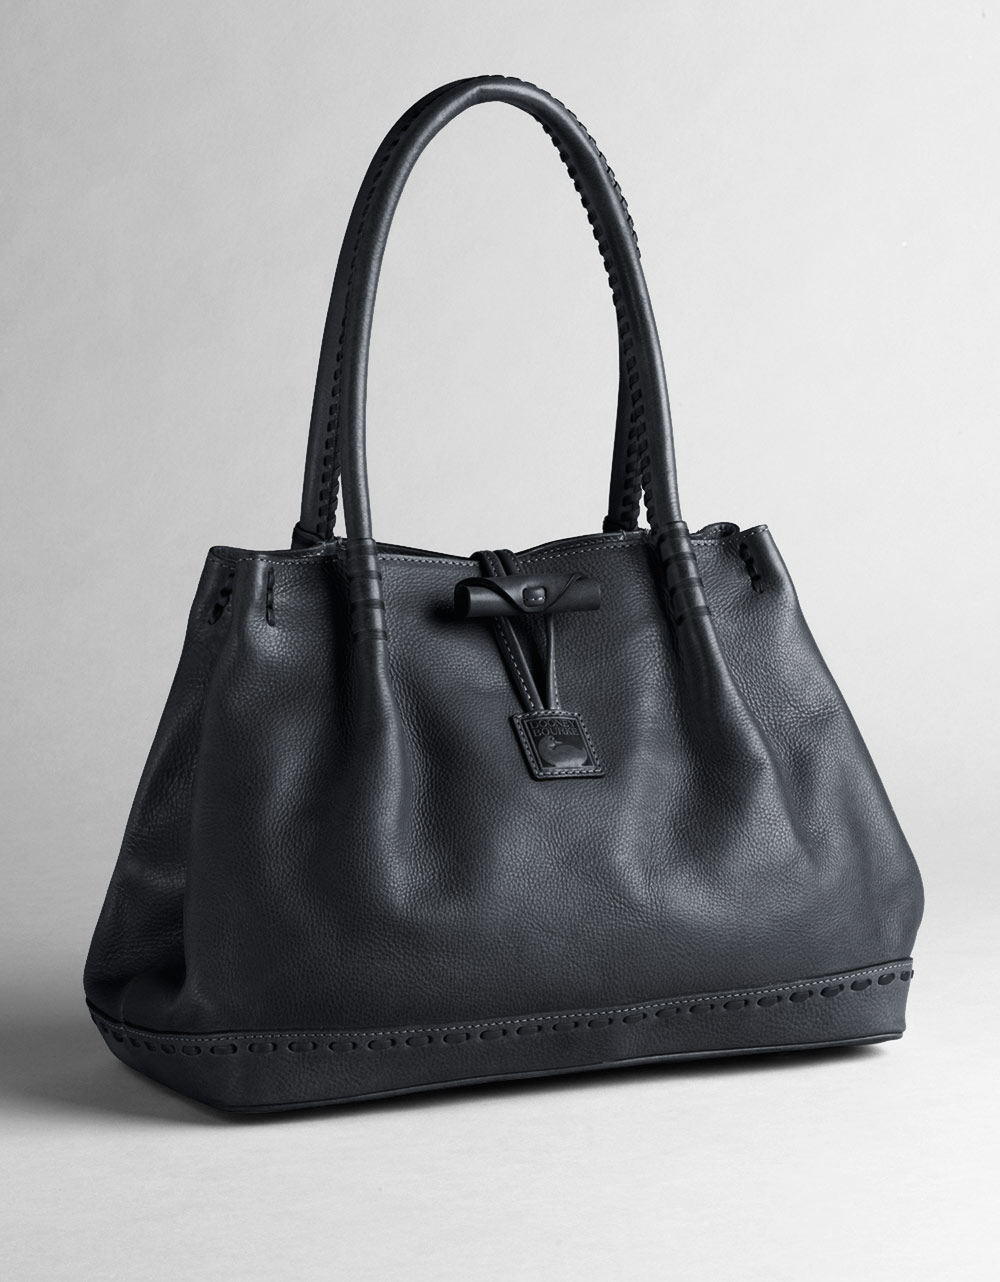 Dooney & Bourke Medium Double Handle Toggle Handbag in Black - Lyst